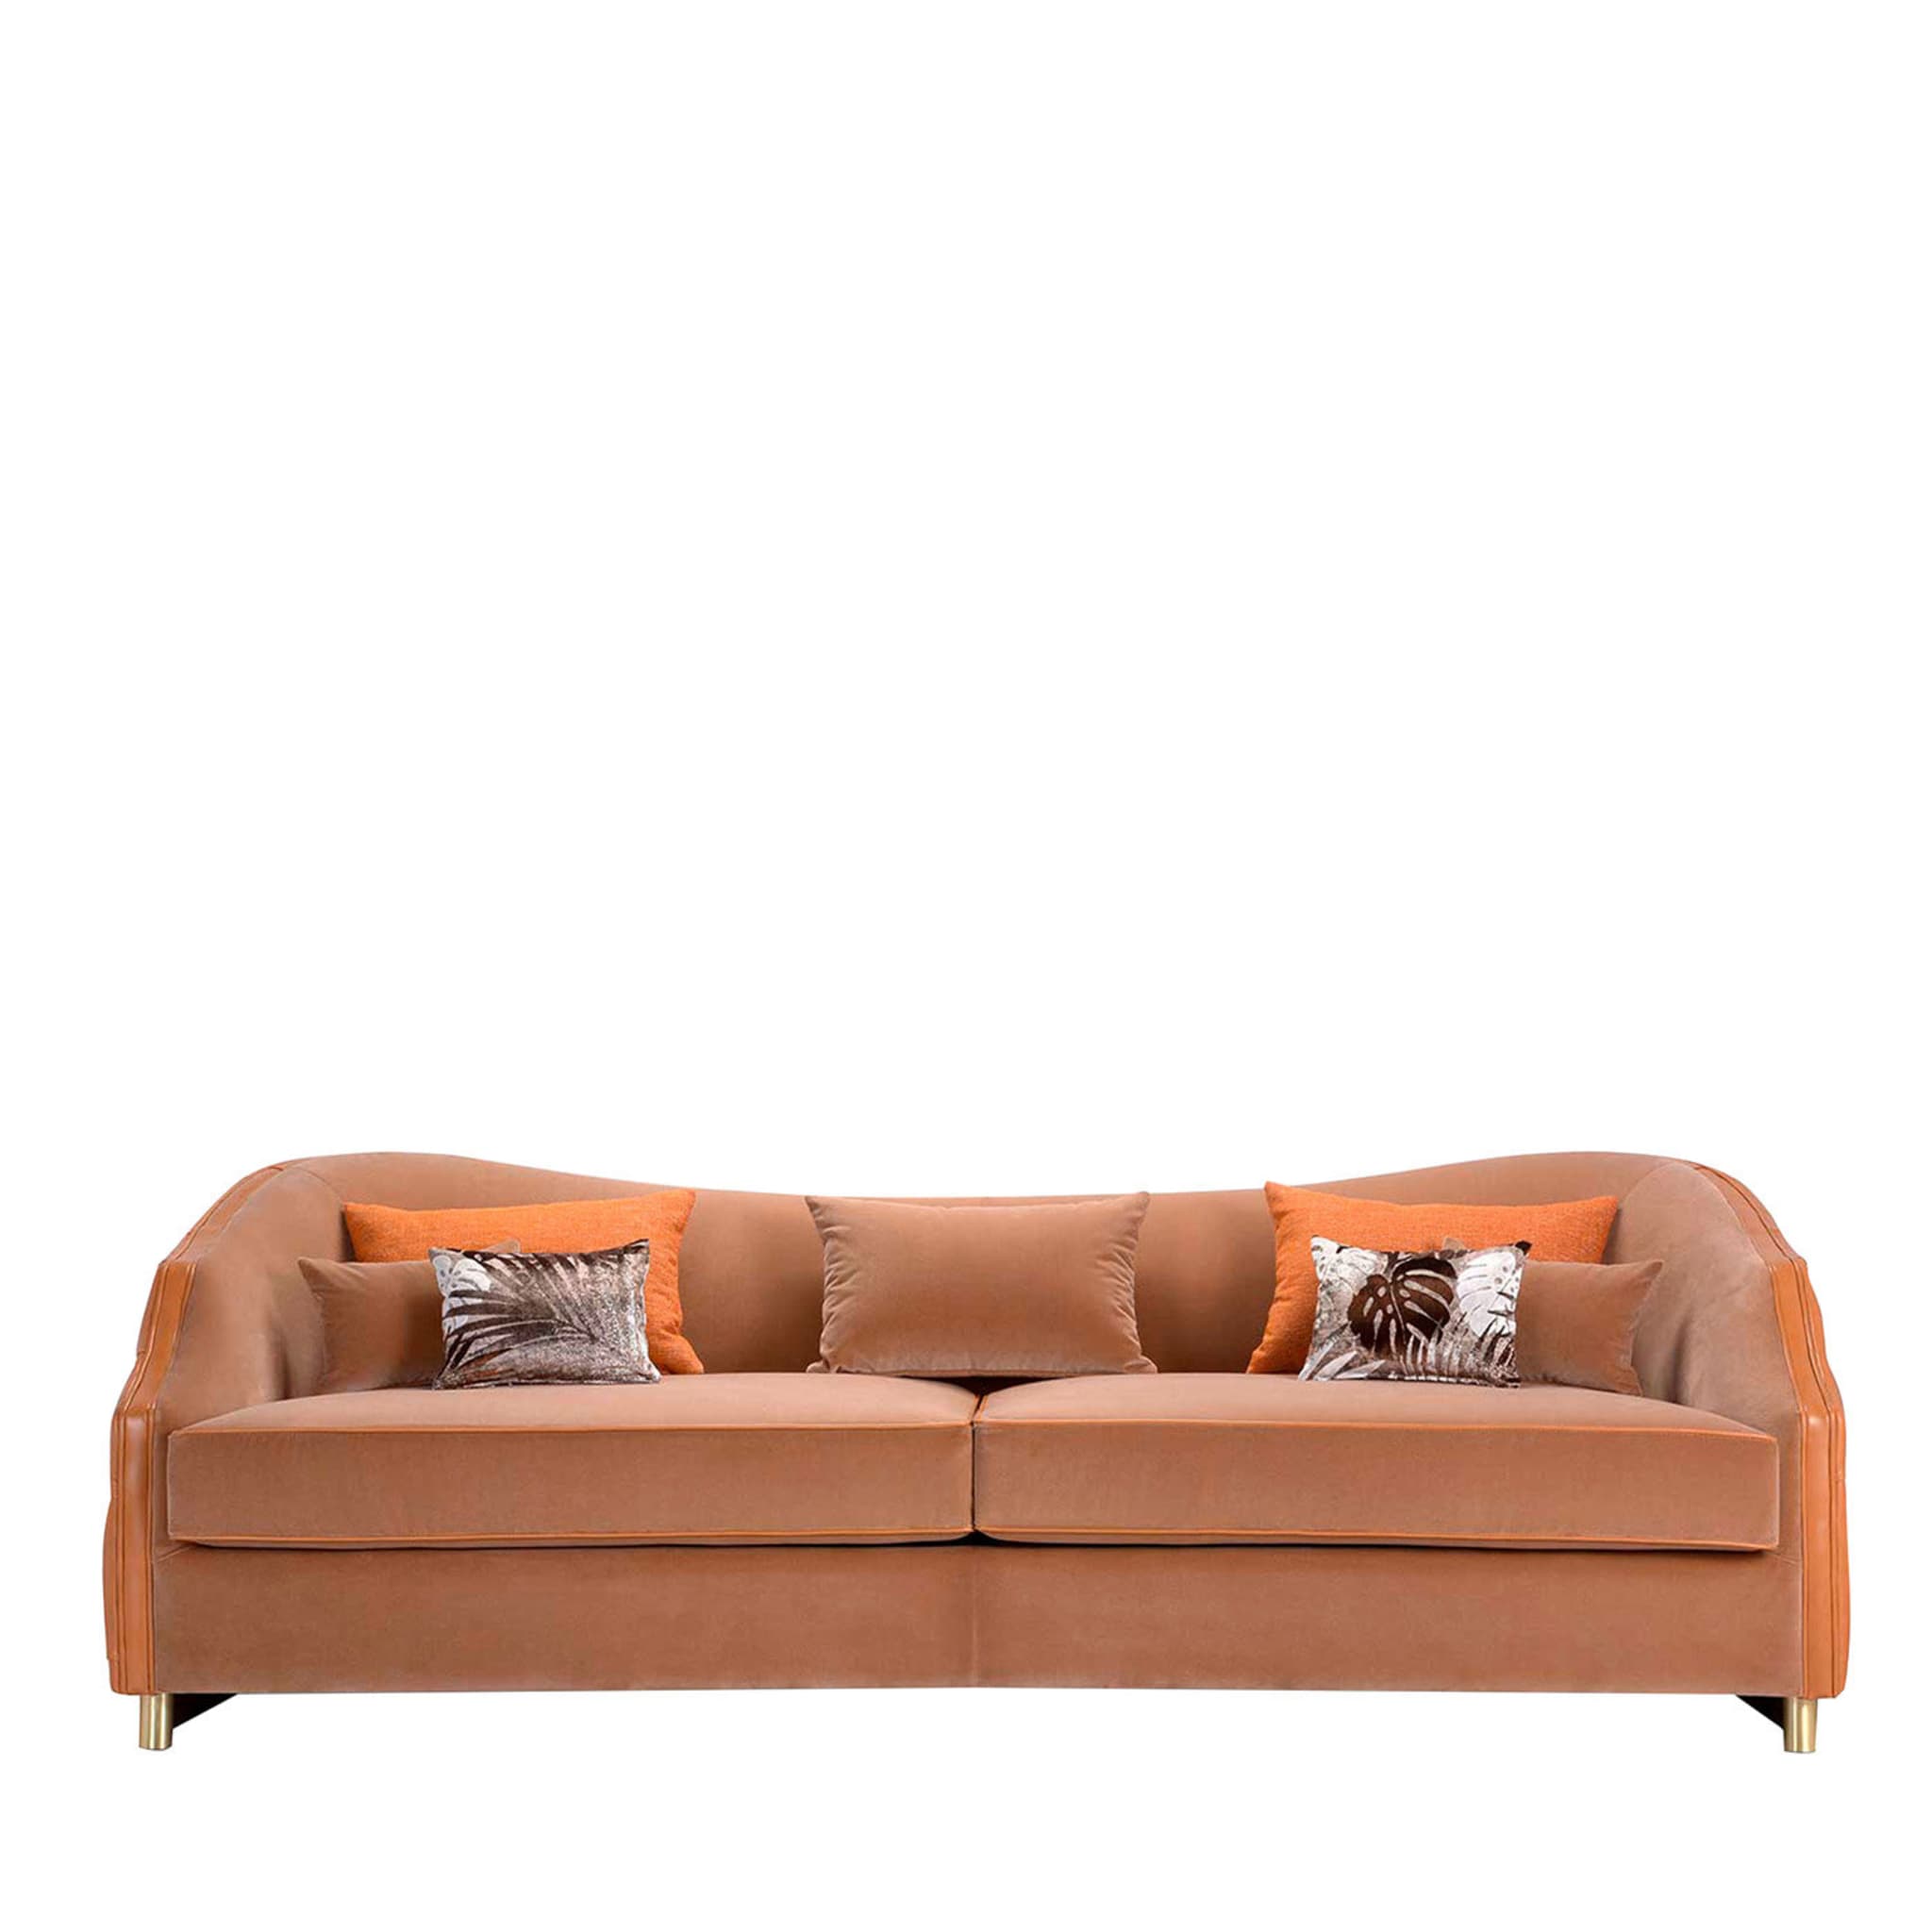 Cleio 3-Seater Leather Sofa - Main view